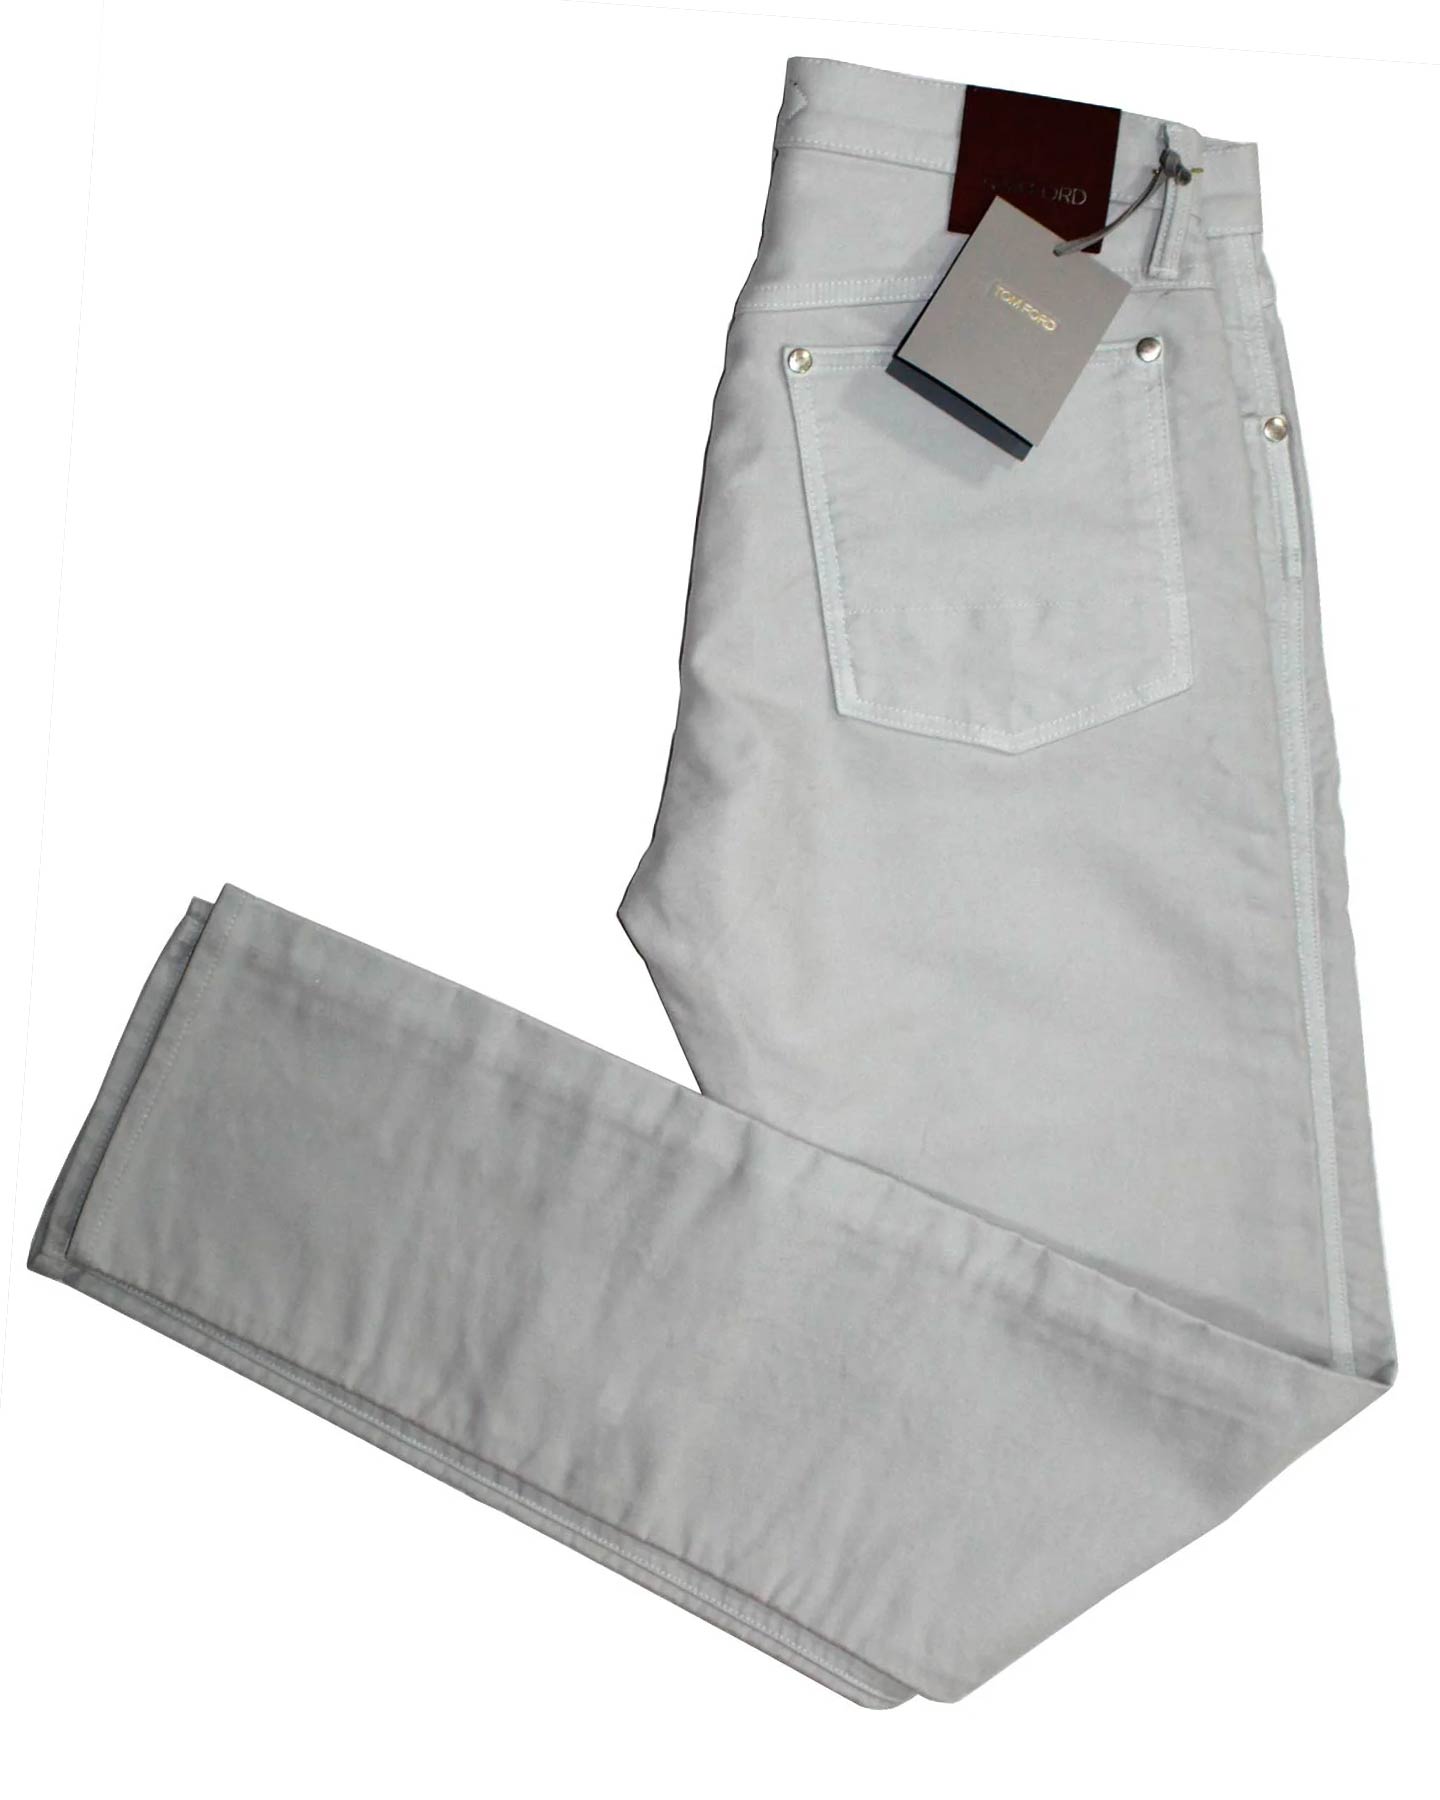 Tom Ford Pants Gray 5 Pocket 31 - Tie Deals